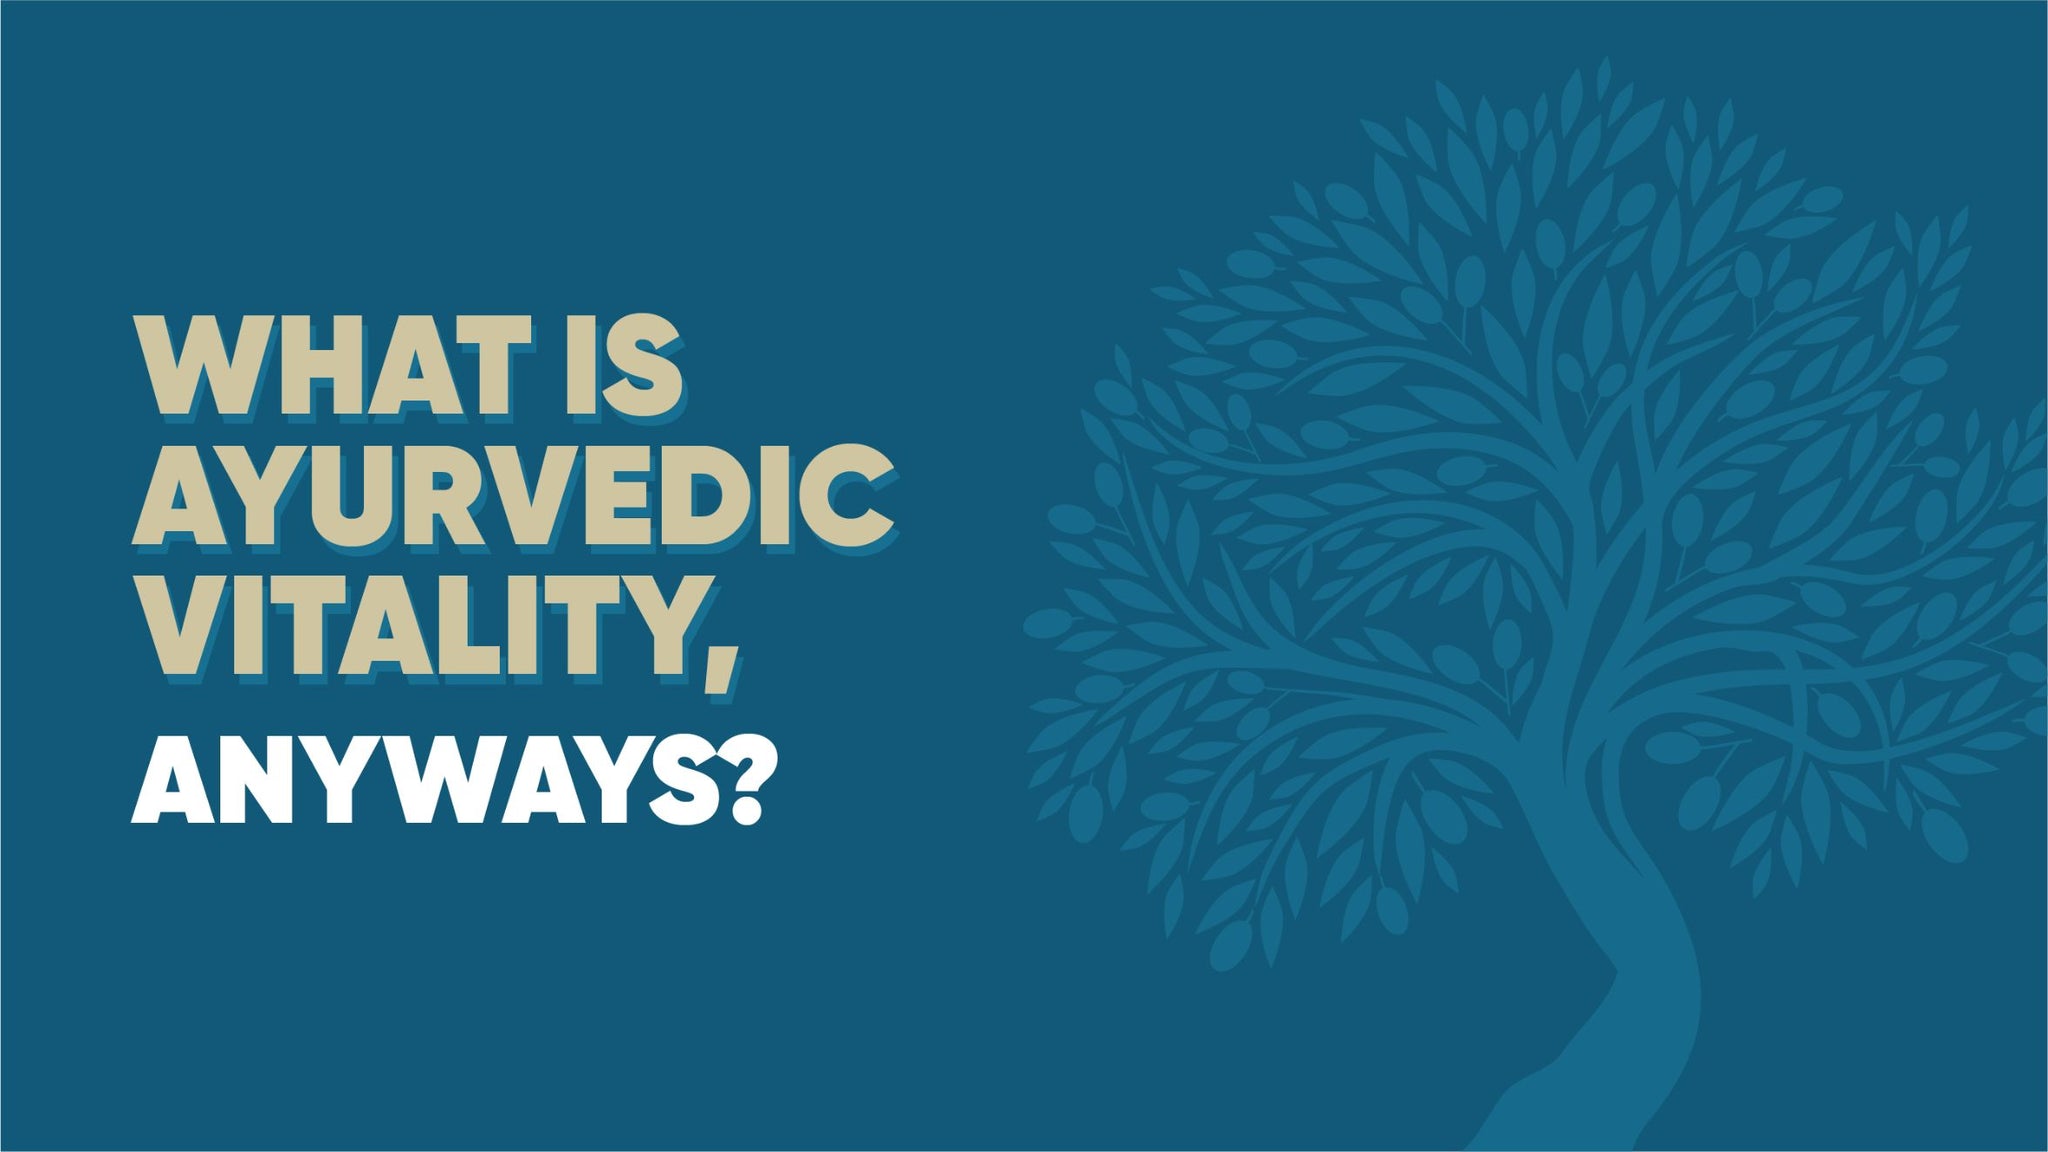 What is Ayurvedic Vitality, Anyway?